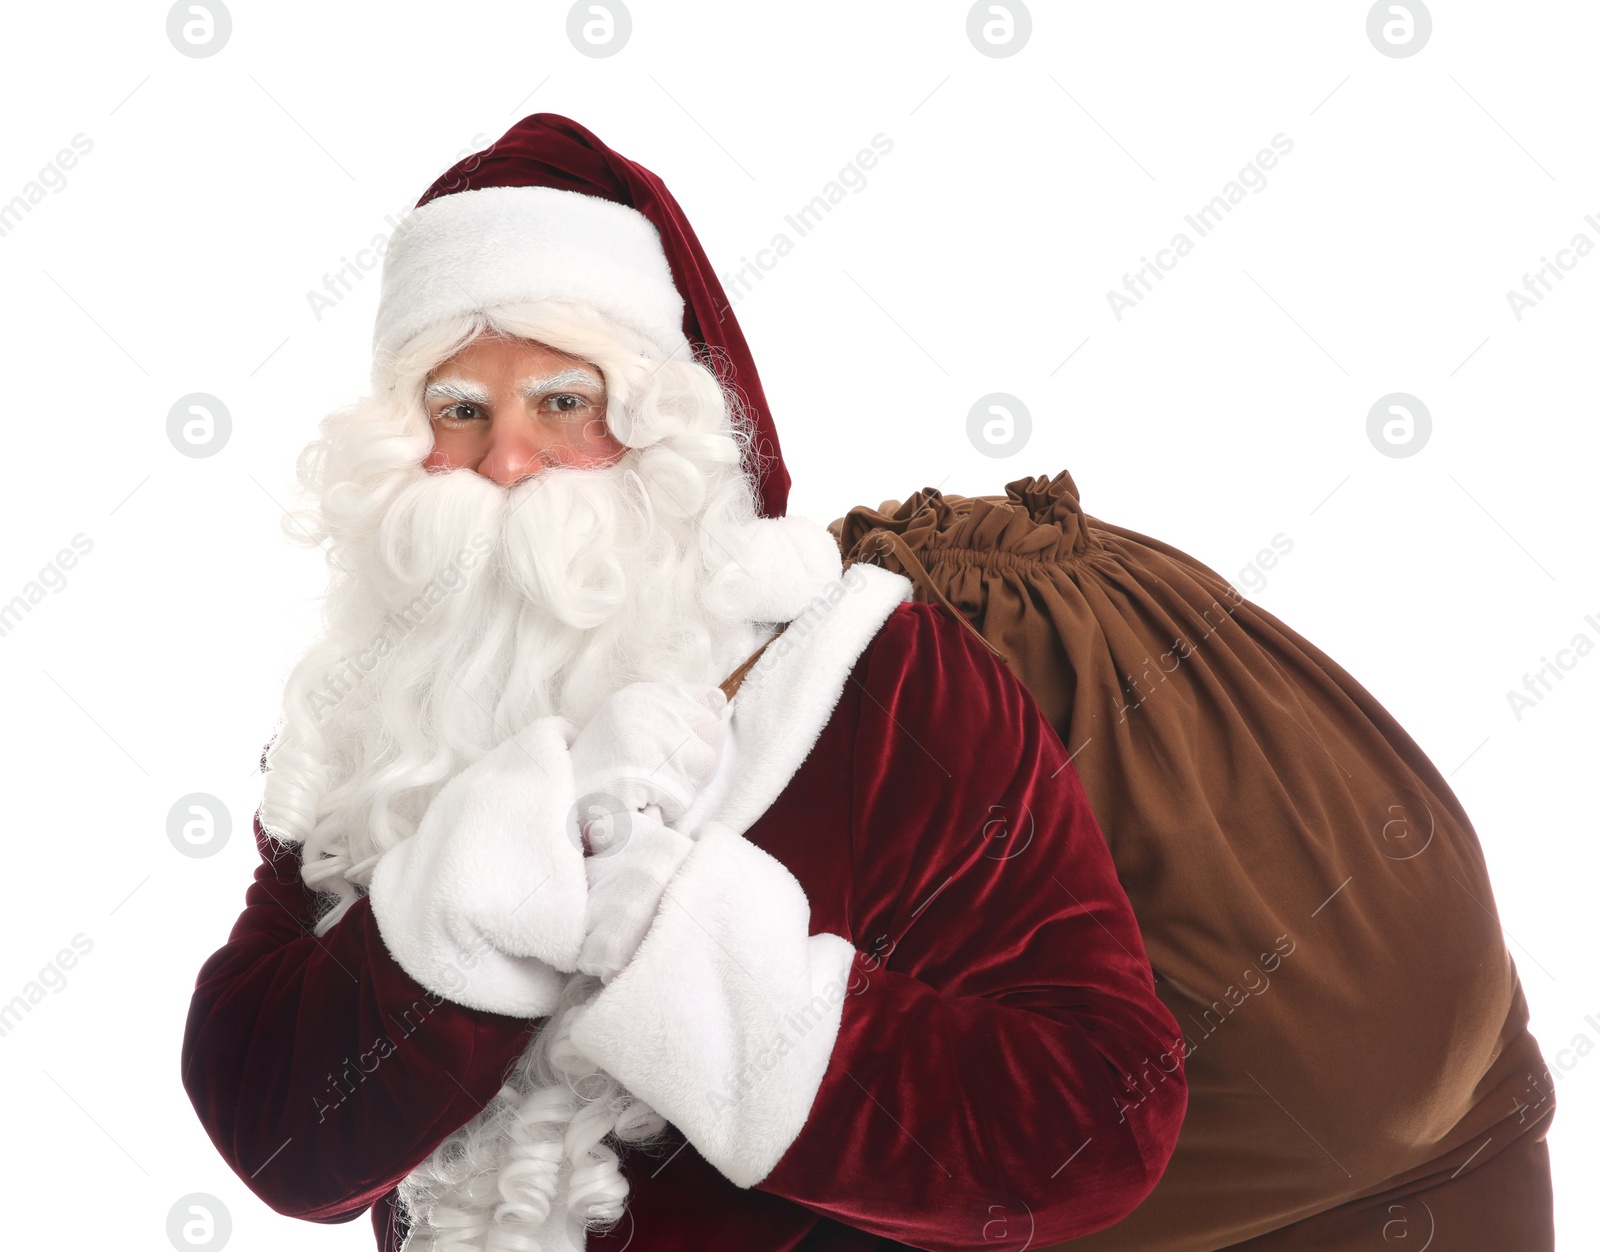 Photo of Santa Claus with sack on white background